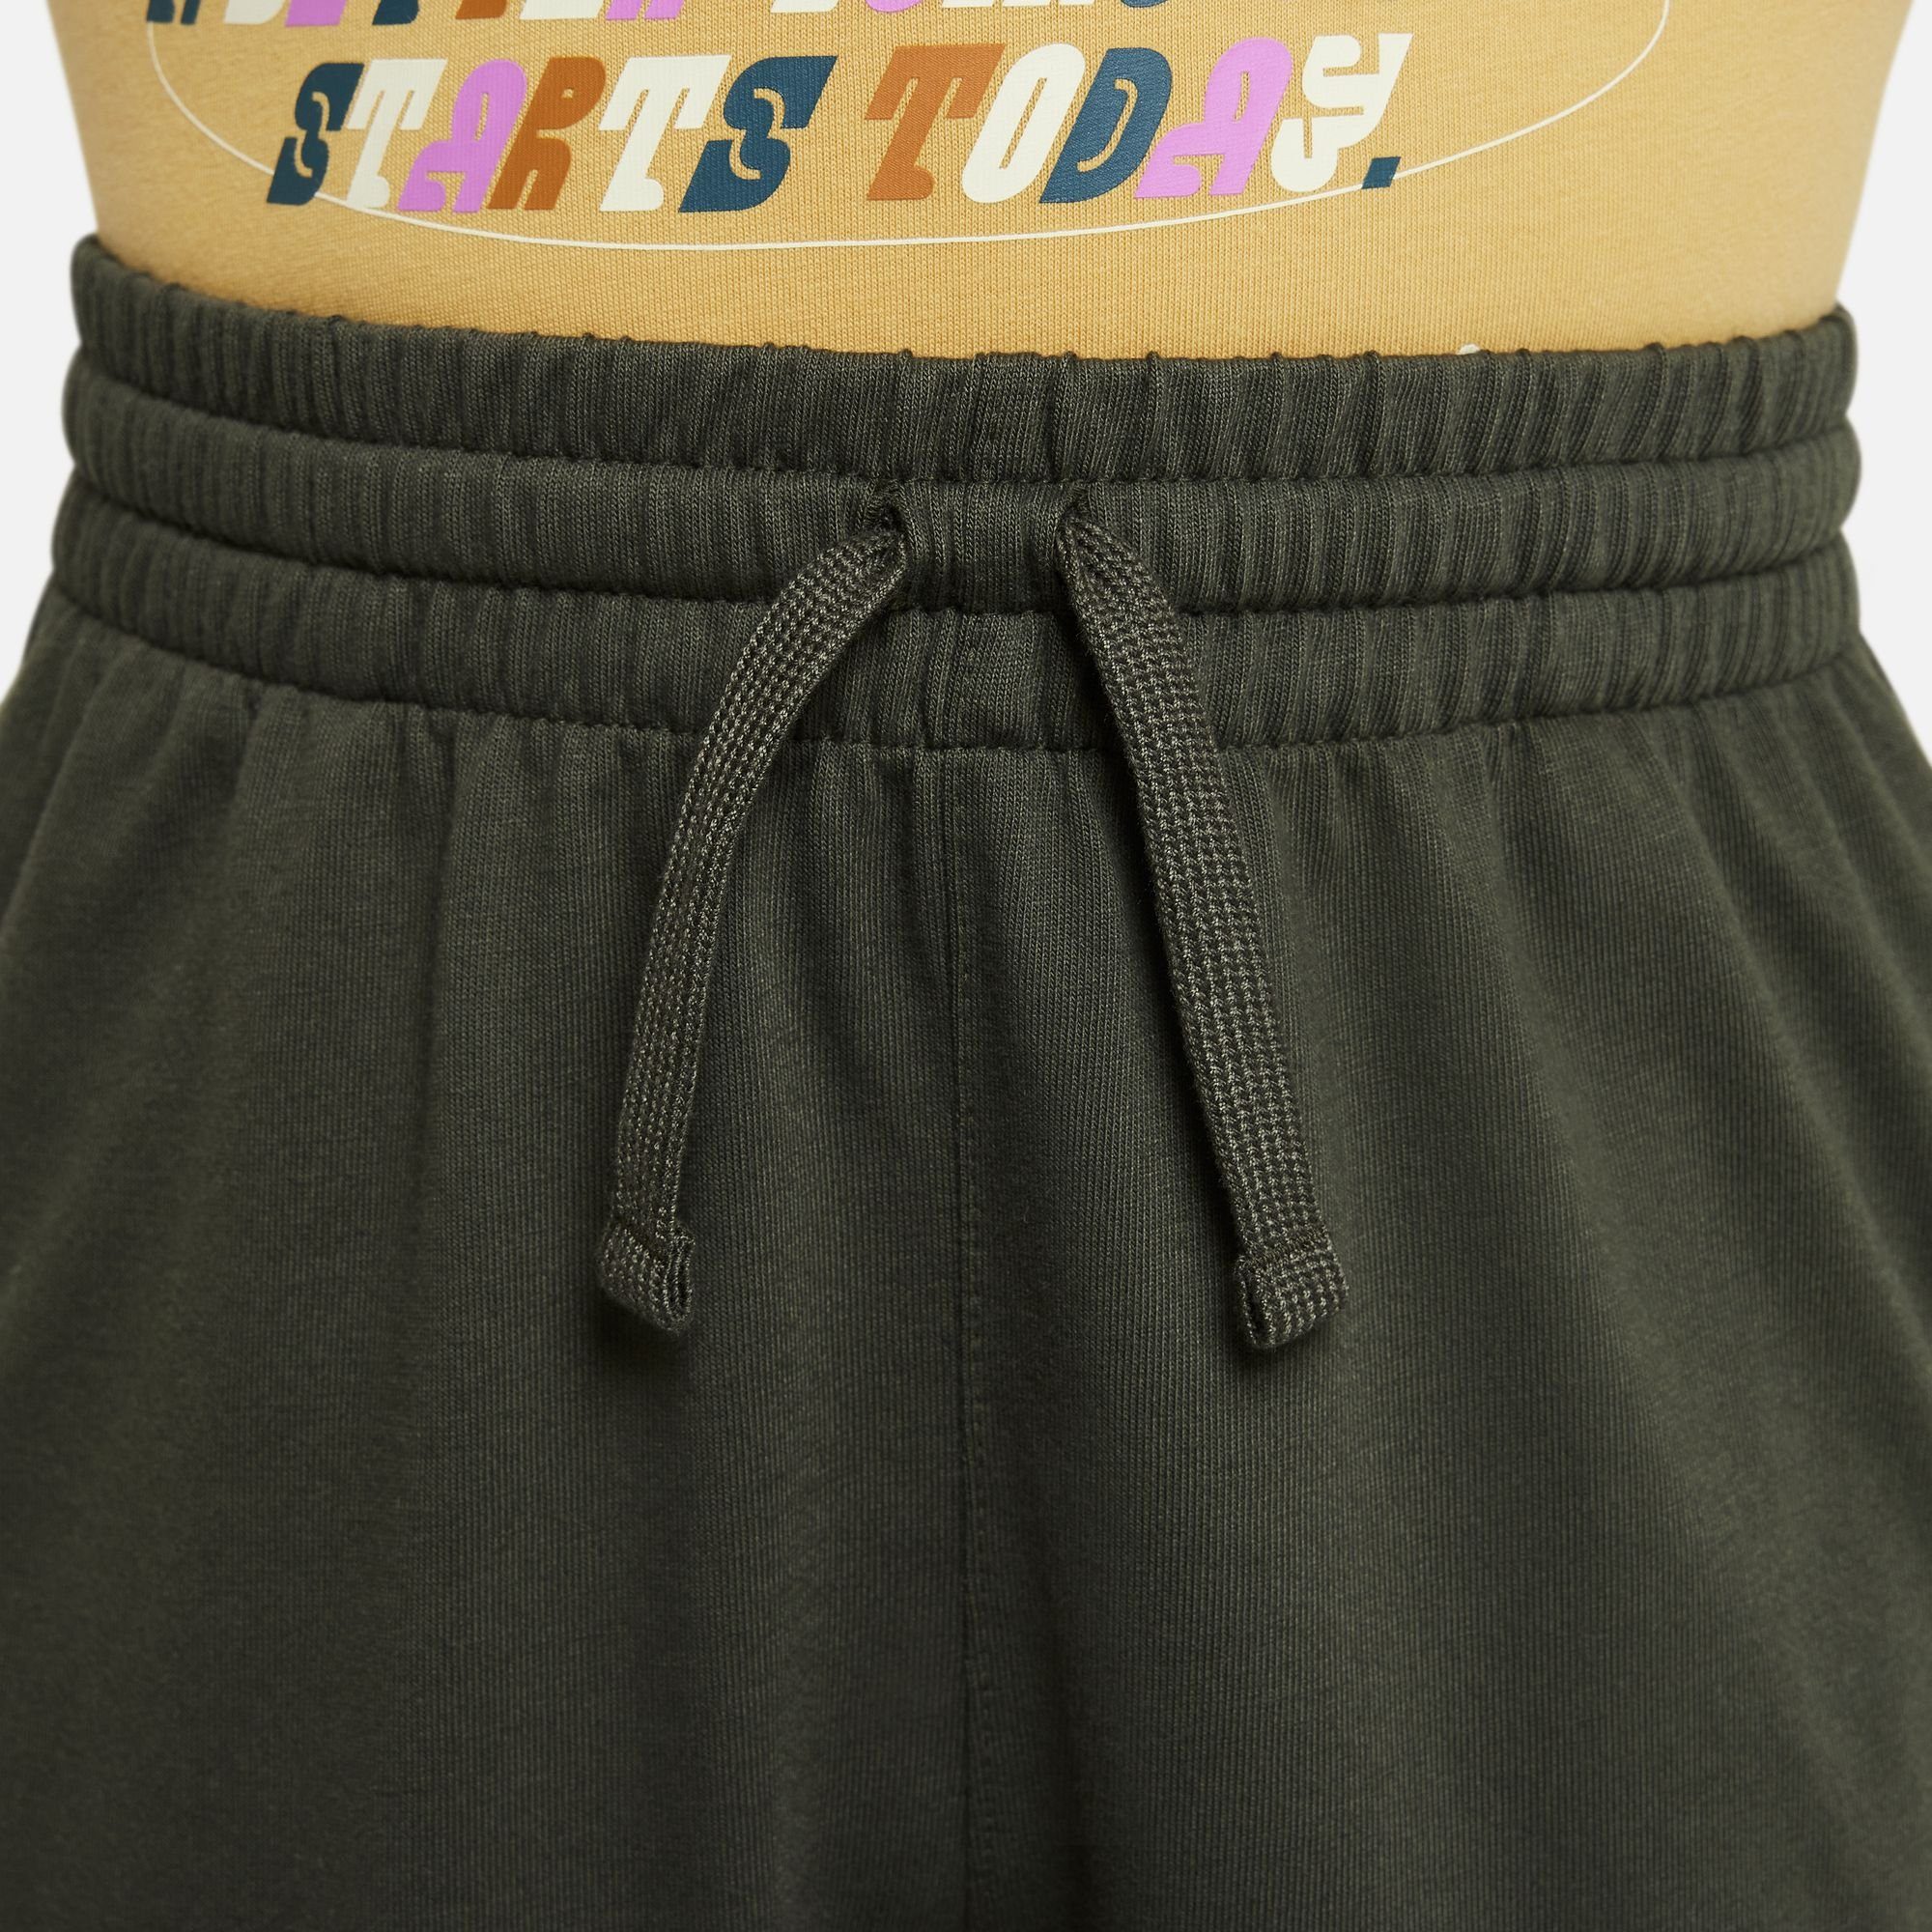 KHAKI/WHITE Nike JERSEY Sportswear (BOYS) KIDS' SHORTS CARGO BIG Shorts